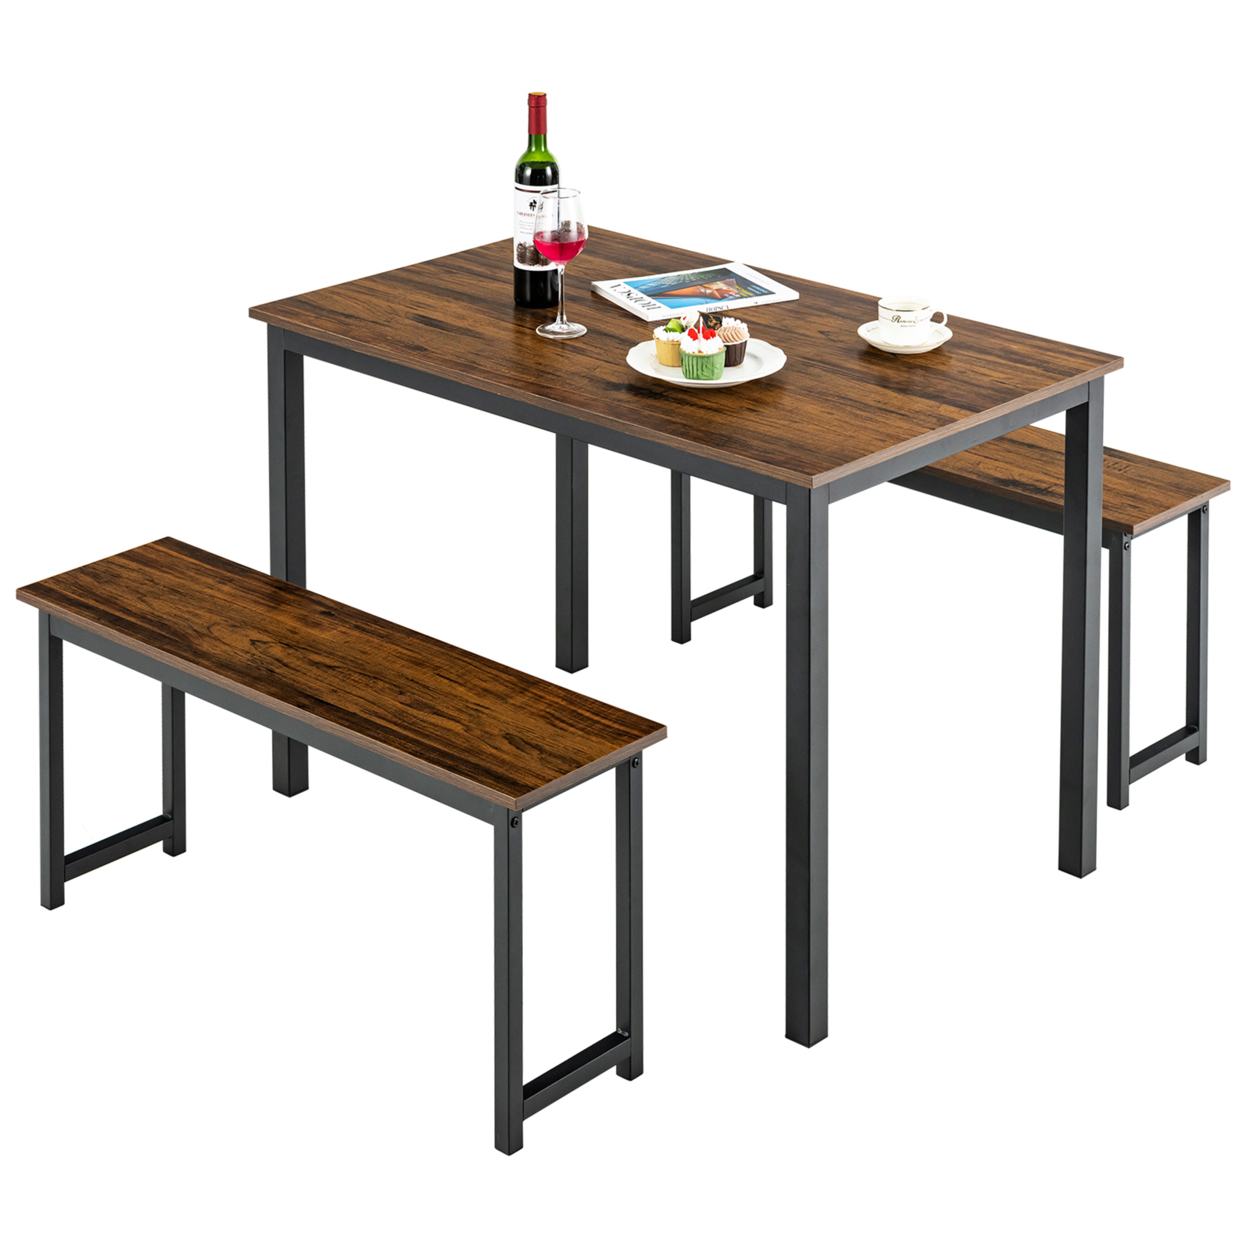 Modern 3 PCS Dining Table Bench Set W/ Metal Frame & Wooden Tabletop - Retro Brown